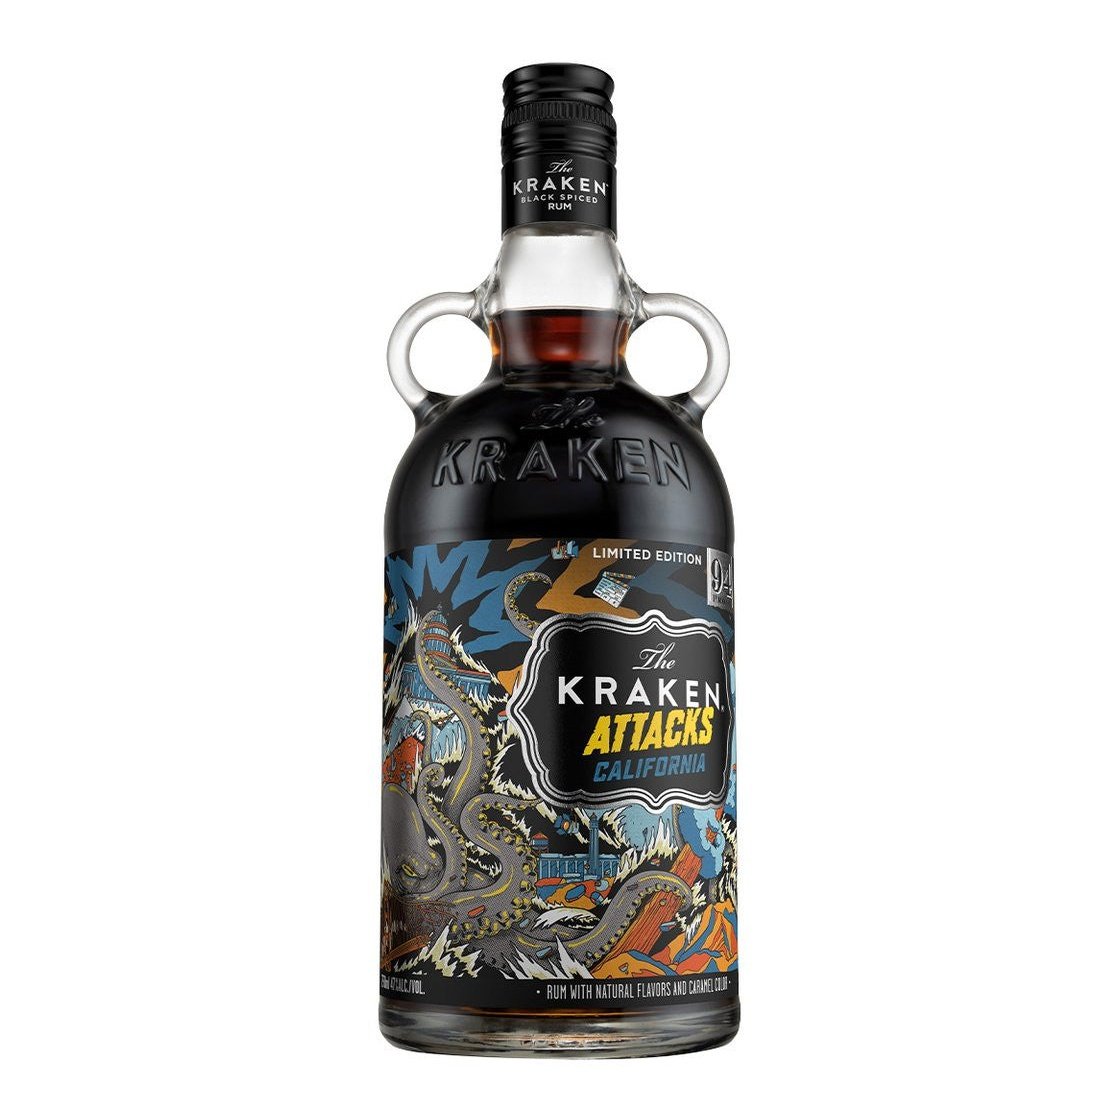 California Kraken Rum The – Spiced Greatbooze (750ml) Edition Attacks